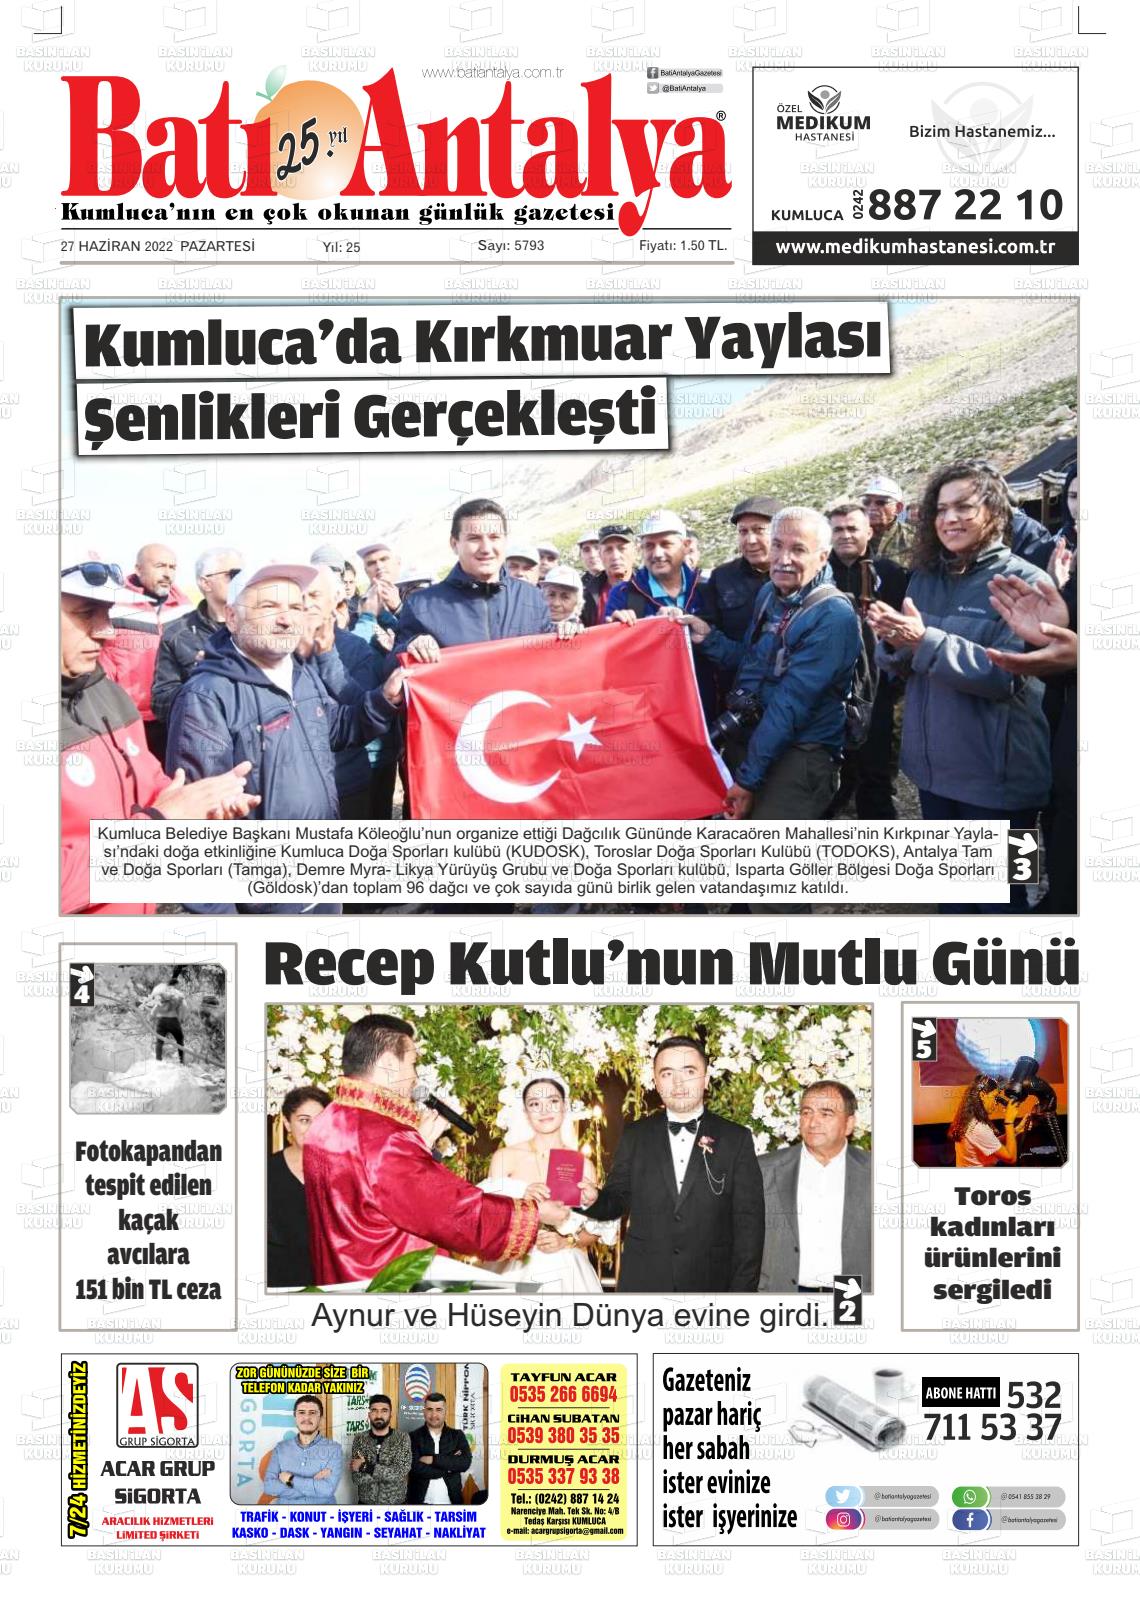 27 Haziran 2022 Batı Antalya Gazete Manşeti